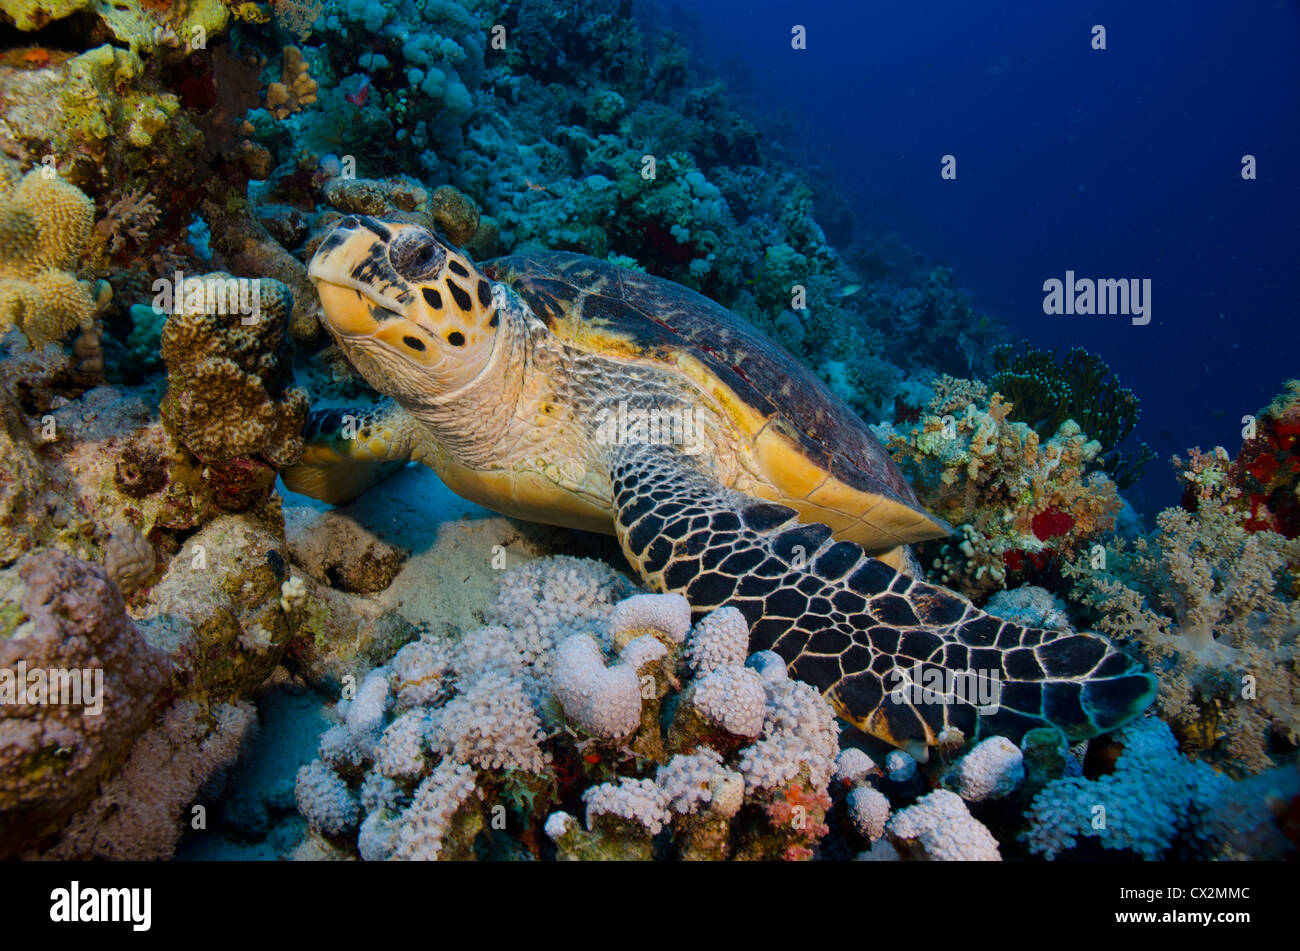 coral reef, Red Sea, Egypt, hawksbill turtle, underwater, scuba, diving, blue water, deep, tropical reef, ocean, sea, hard coral Stock Photo